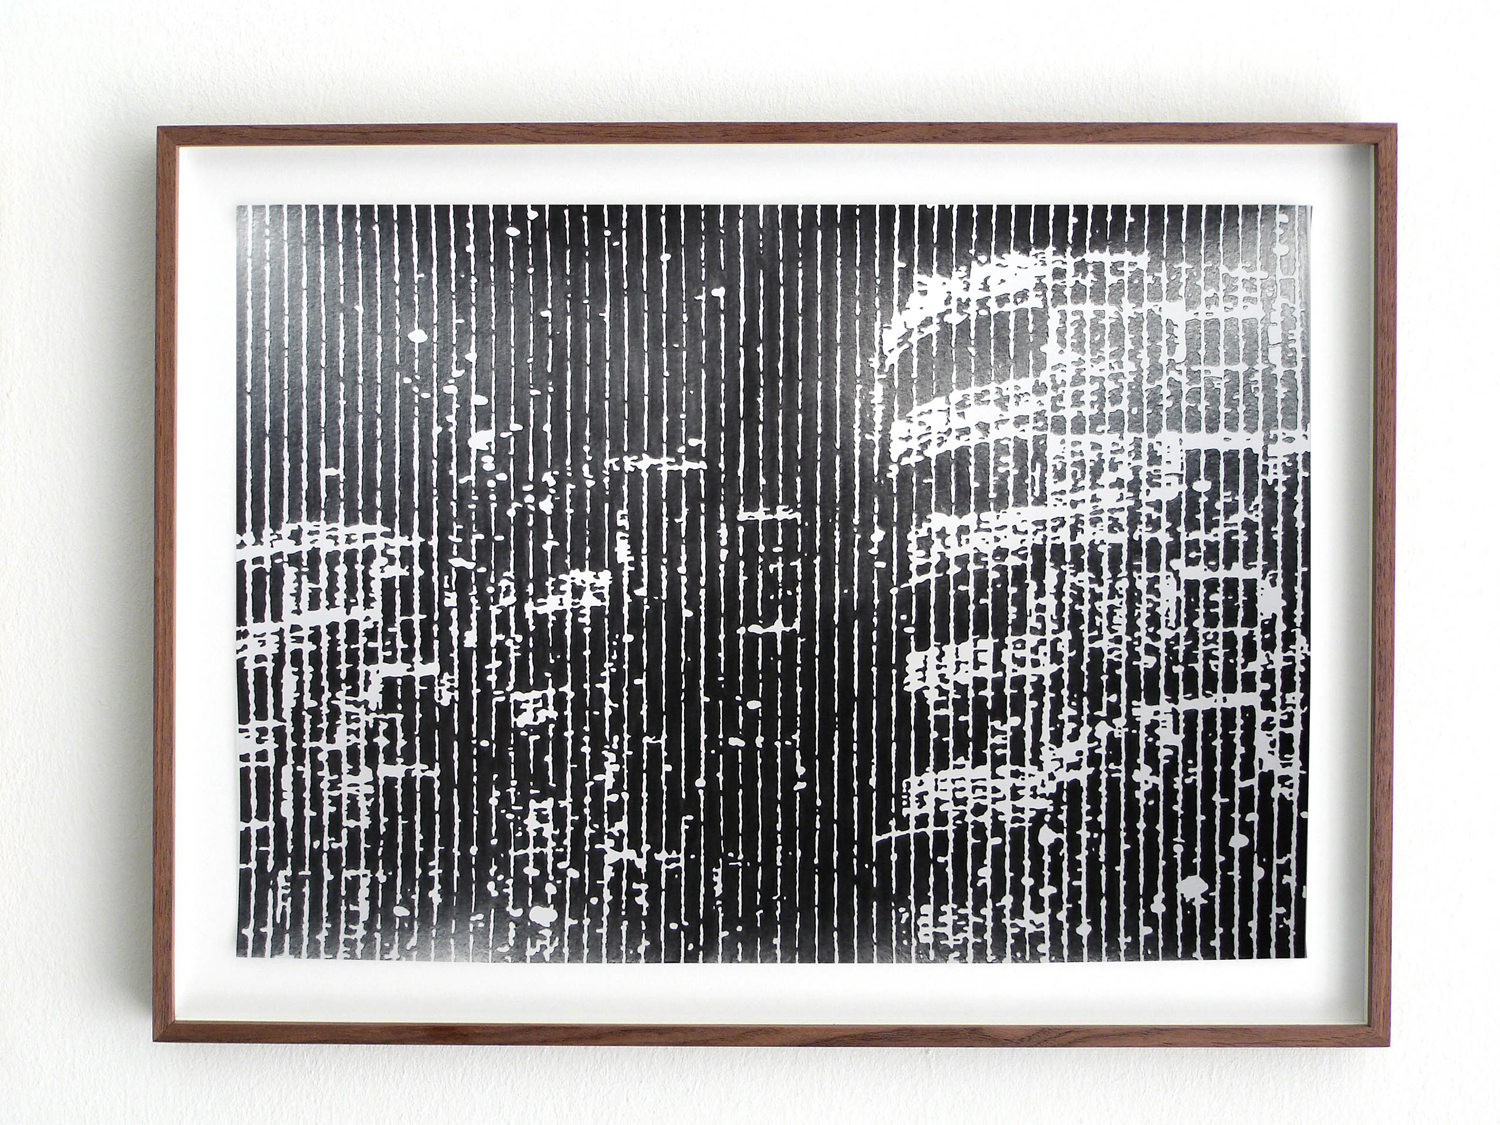   Vision/ navane, 2008, pencil on paper, 29,7 x 42cm  